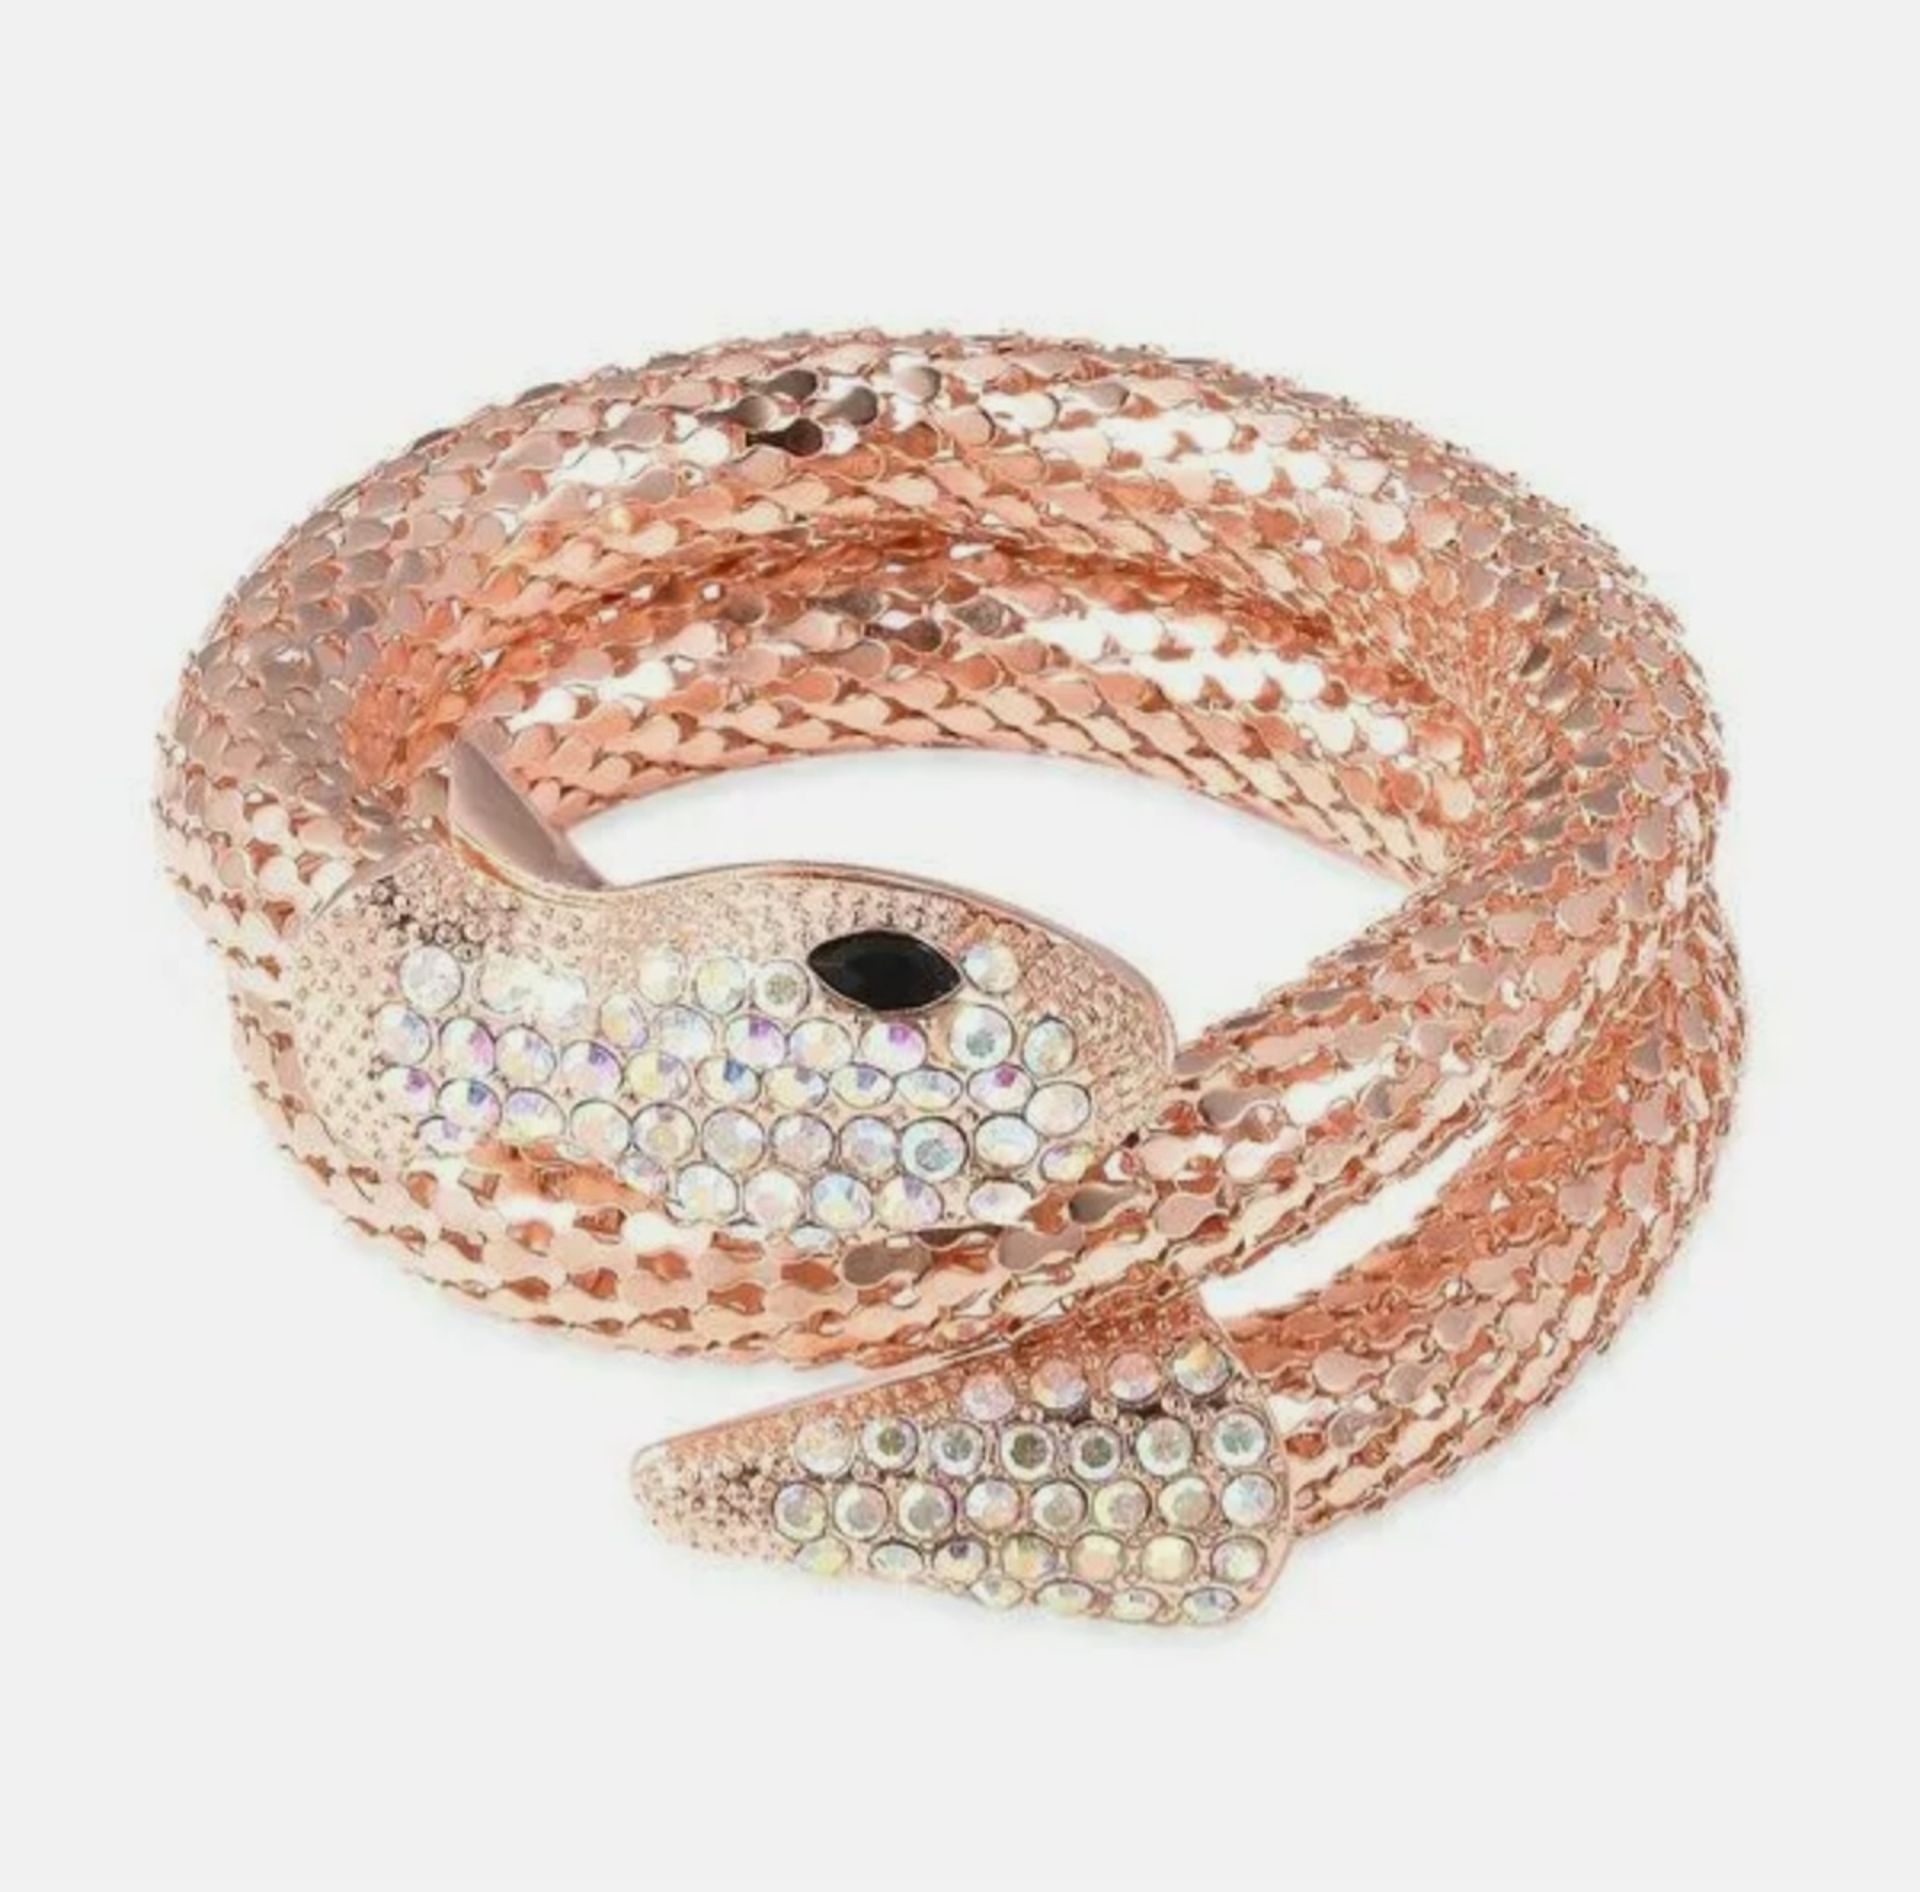 NEW! Rose Gold Tone Mystic White Crystal & Simulated Black Spinel Snake Bracelet - Image 2 of 4